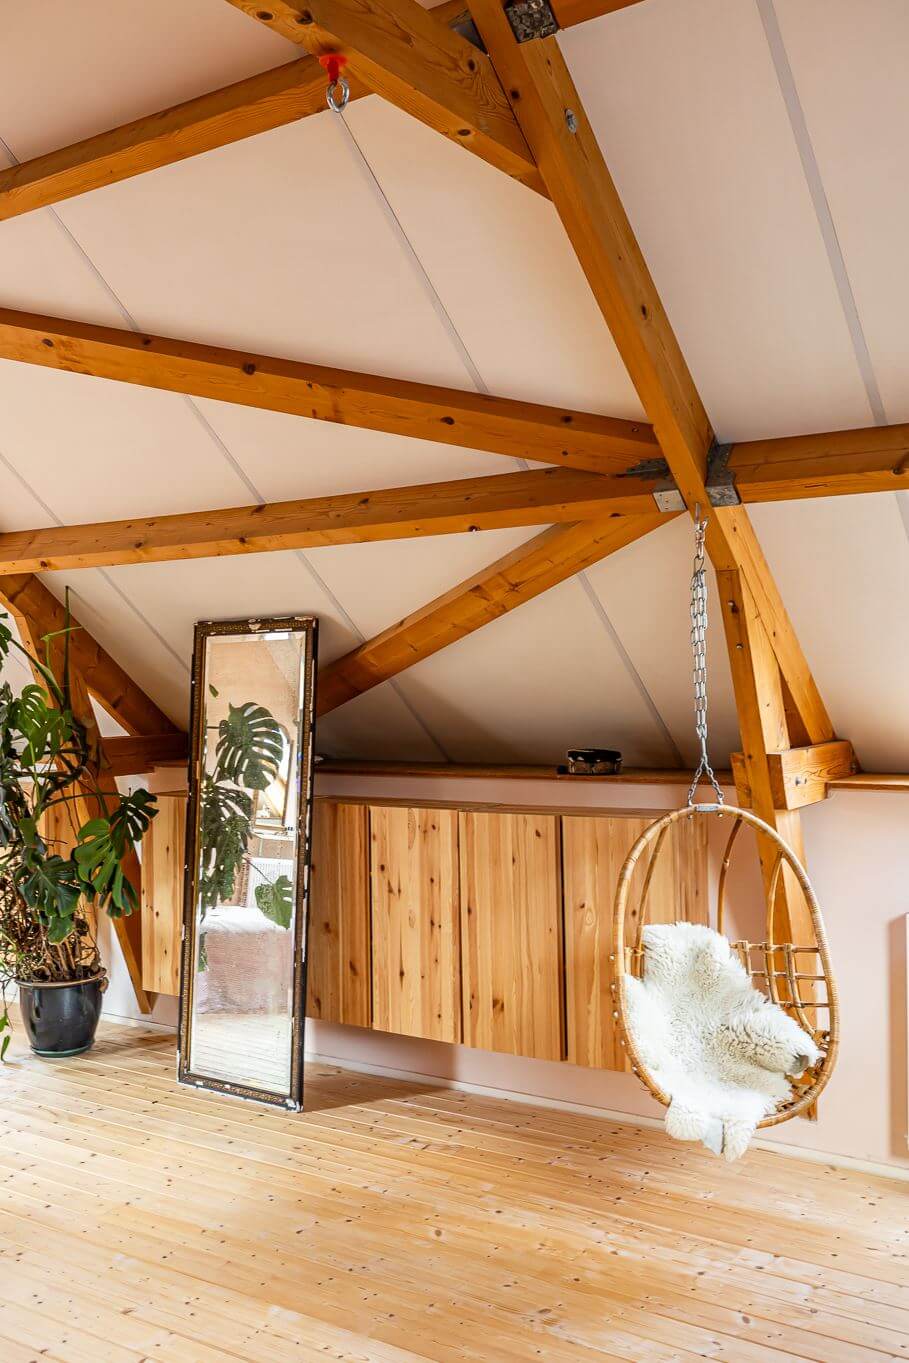 attic-room-wooden-beams-rattan-hanging-chair-nordroom